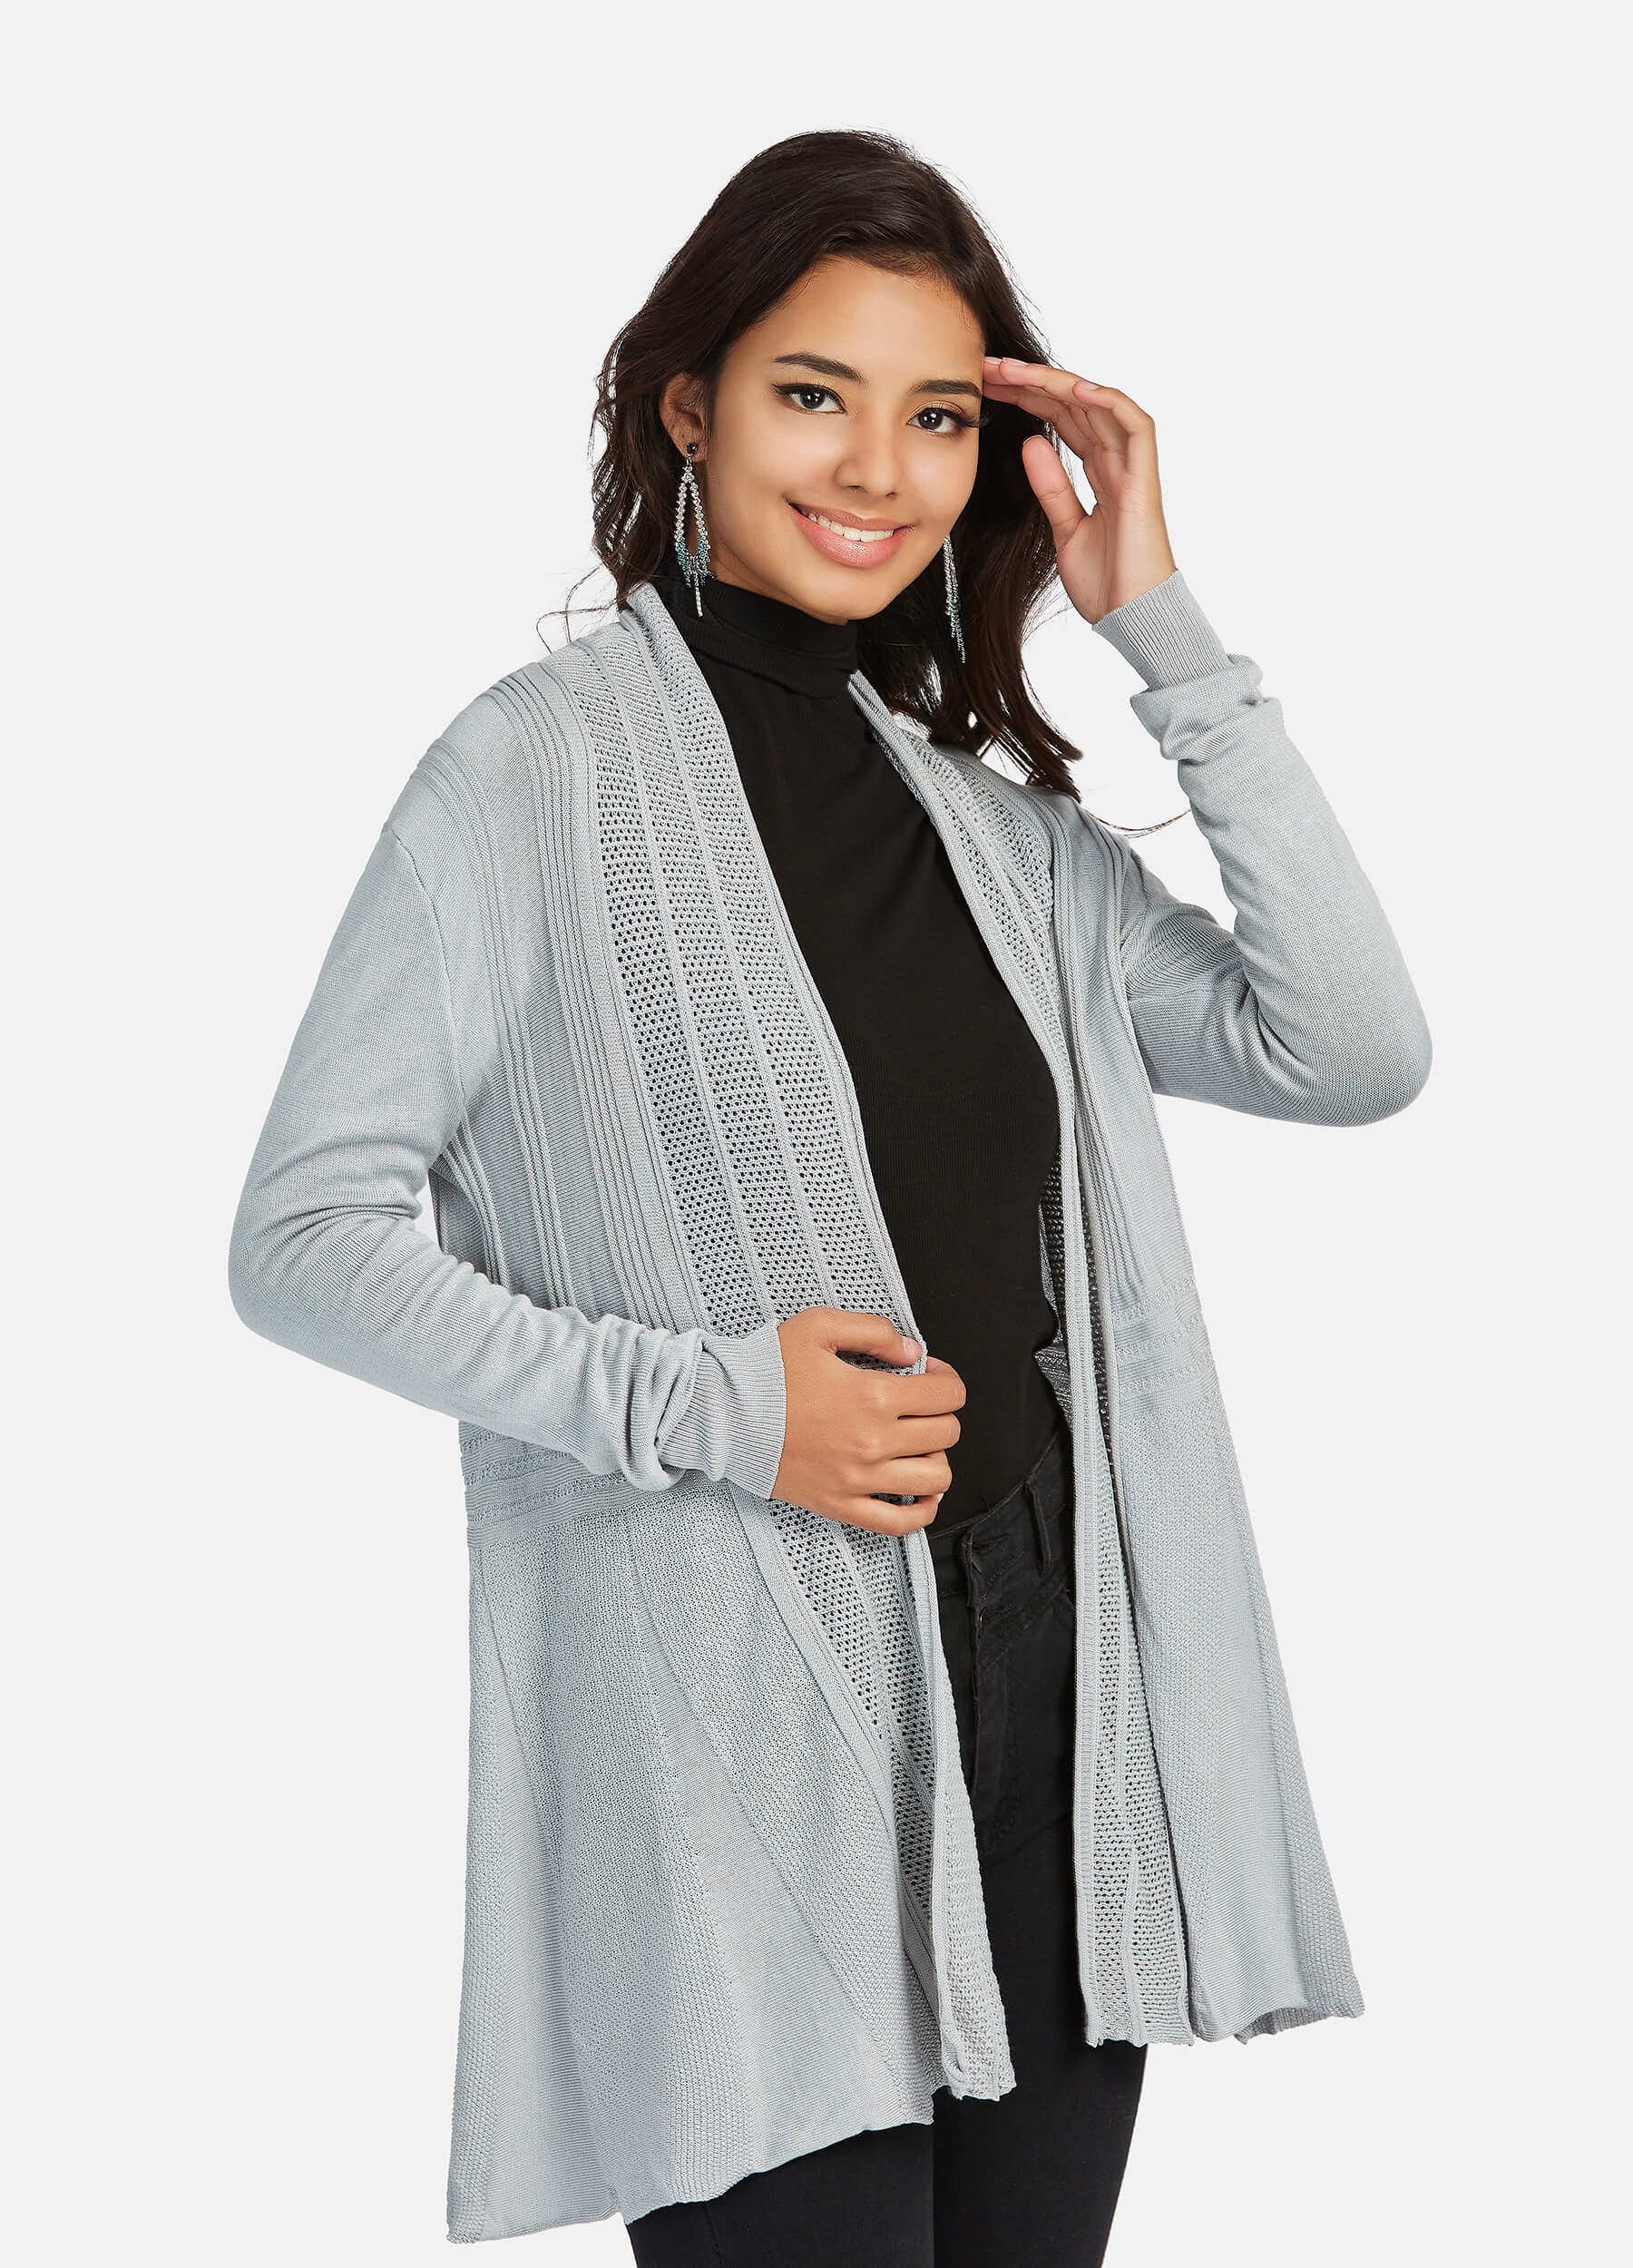 MECALA Women's Long Sleeve Grey Cardigan